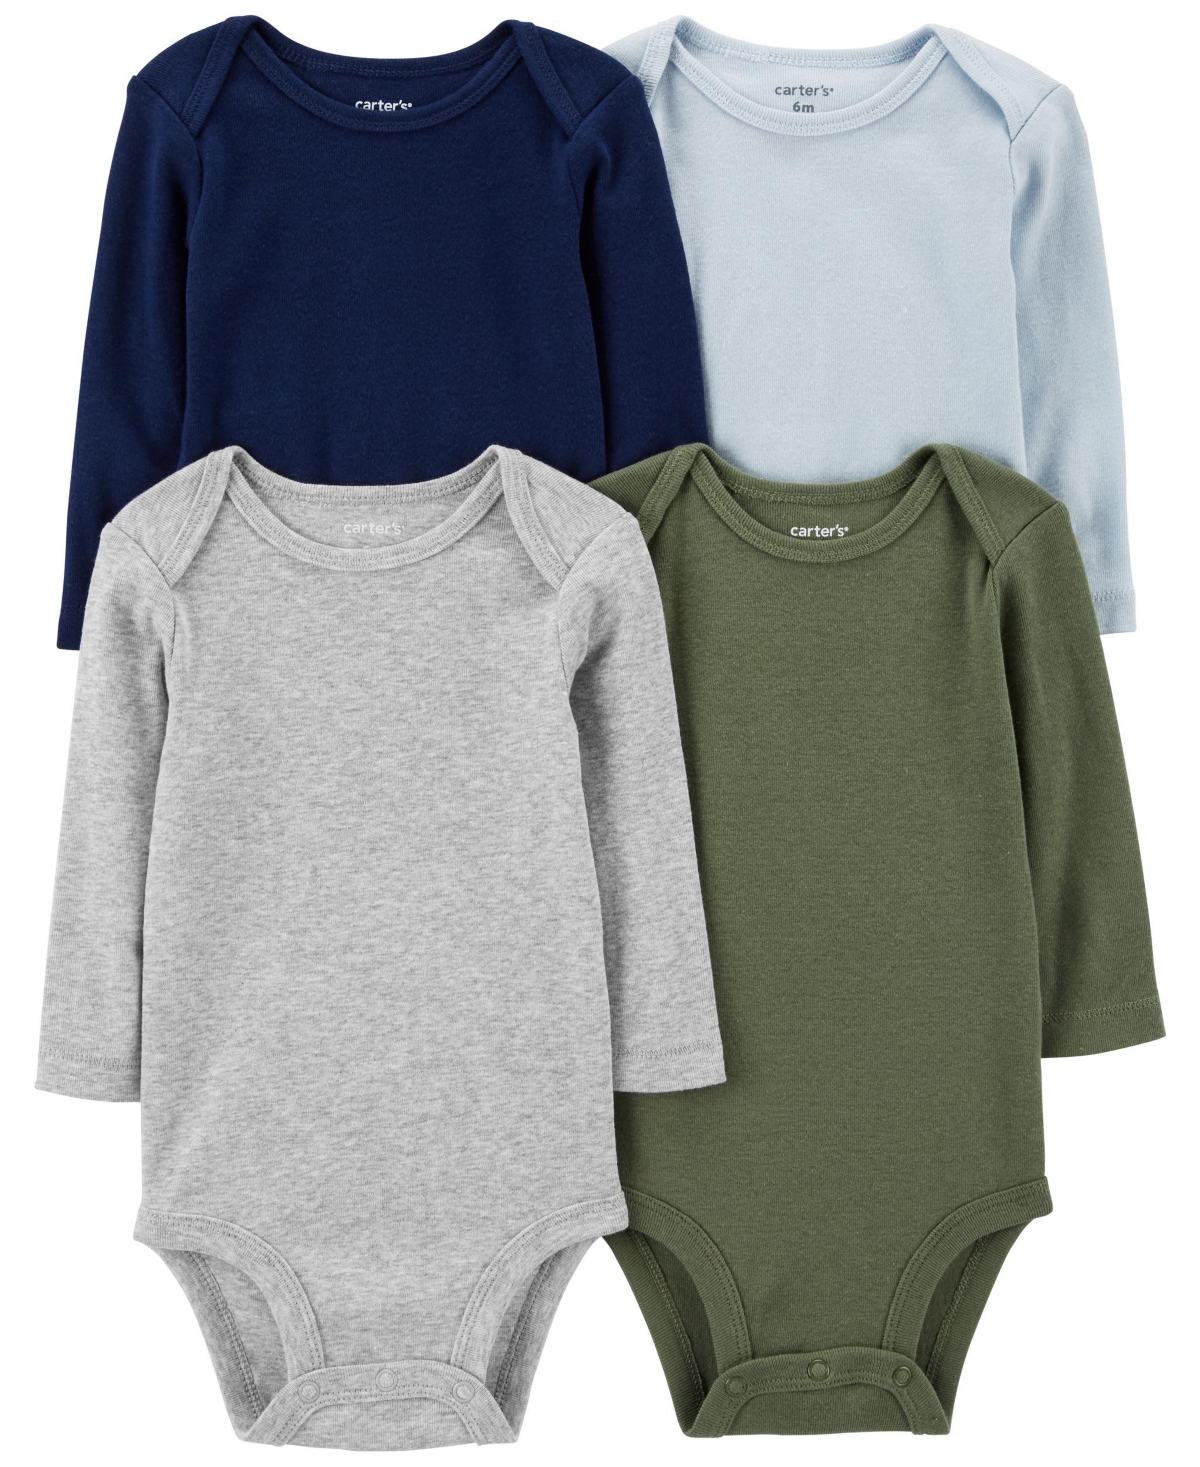 Carter's Baby Boys Long Sleeve Bodysuits, Pack Of 4 In Blue Multi